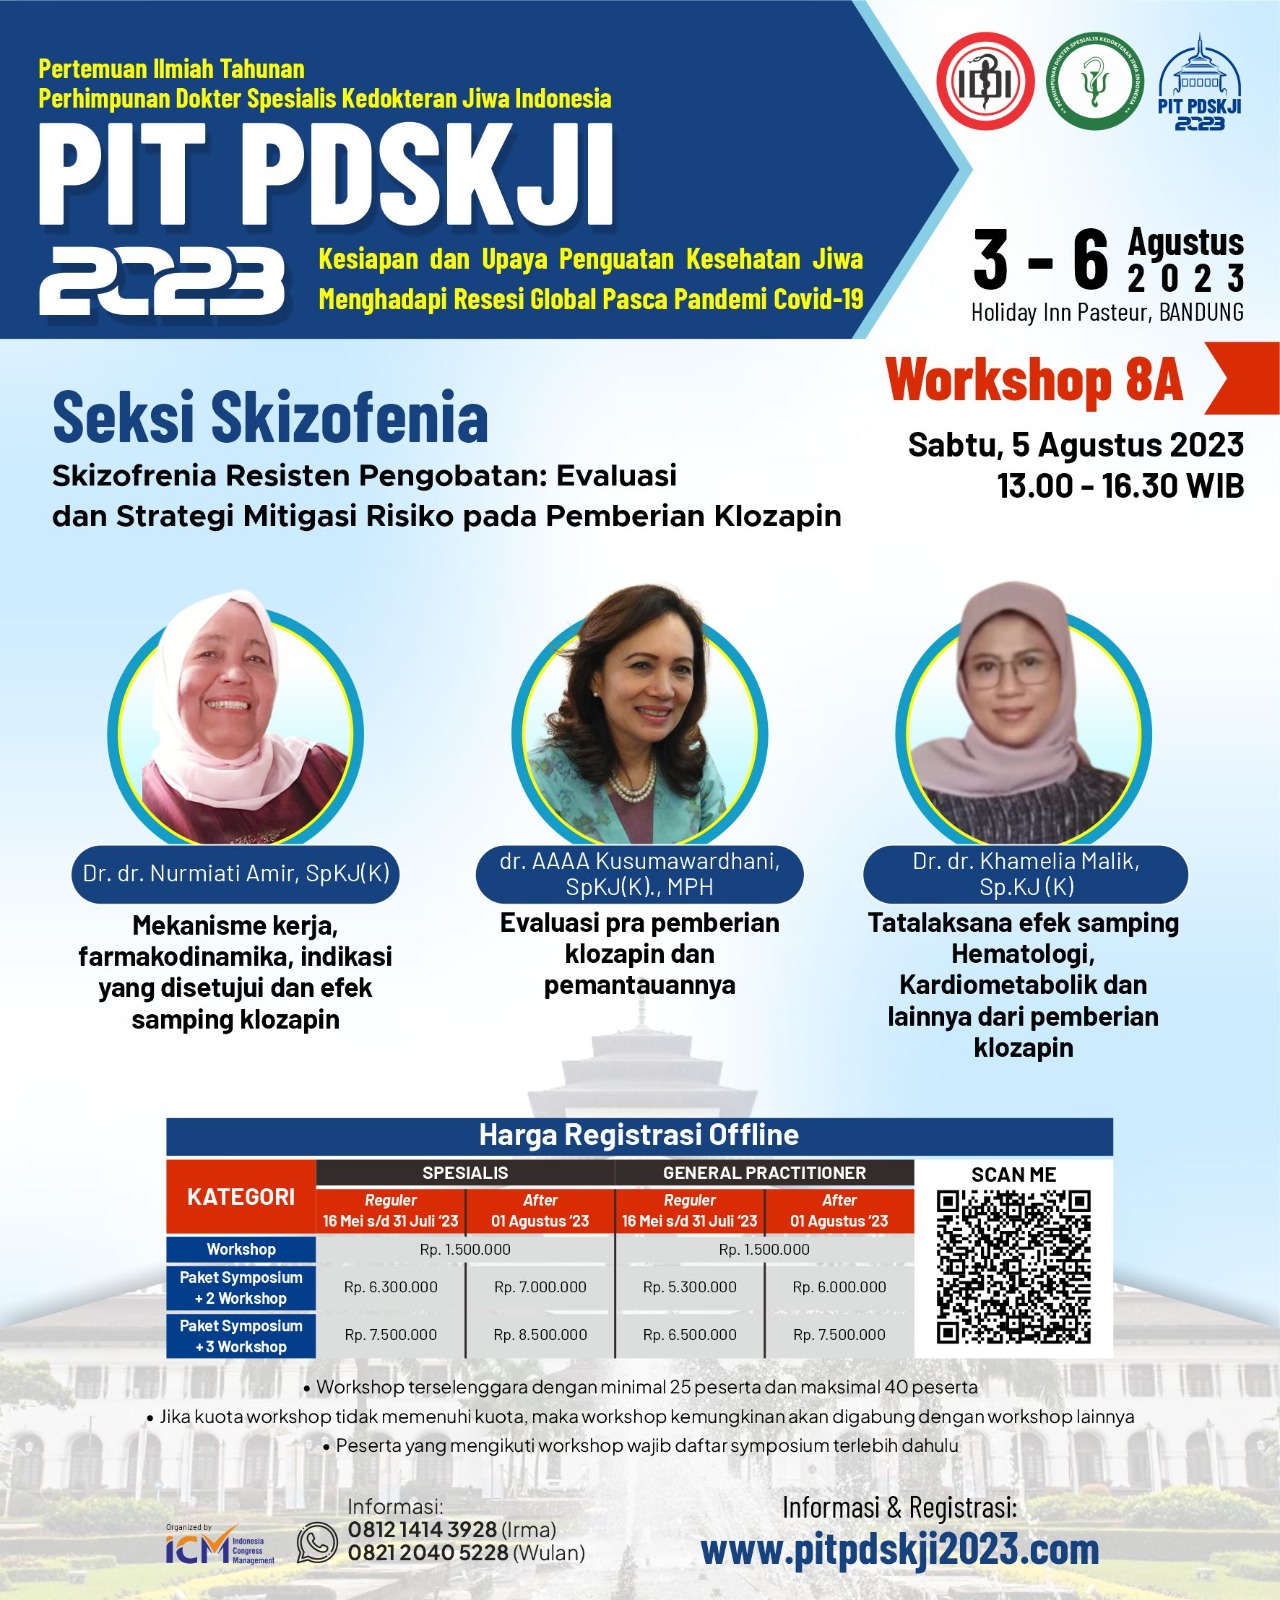 PIT PDSKJI Workshop 8A : Seksi Skizofrenia